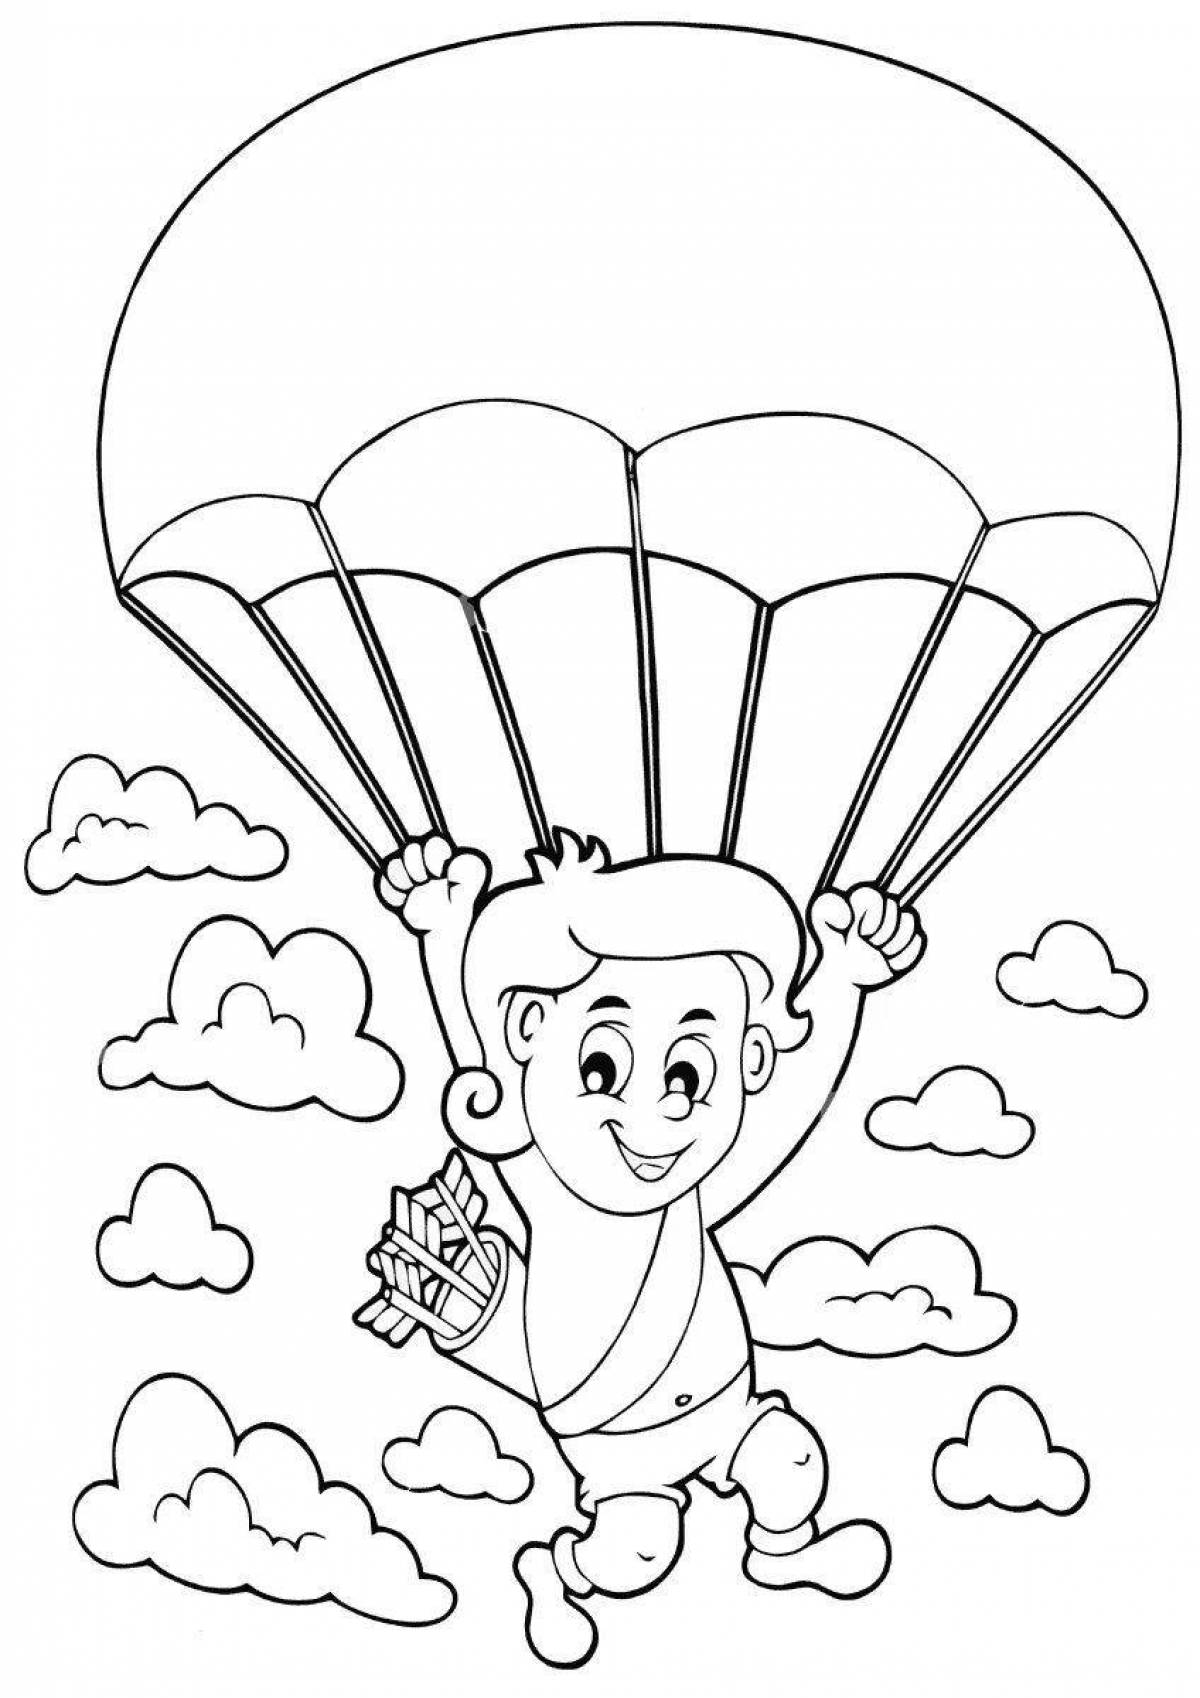 A fun parachute coloring book for juniors